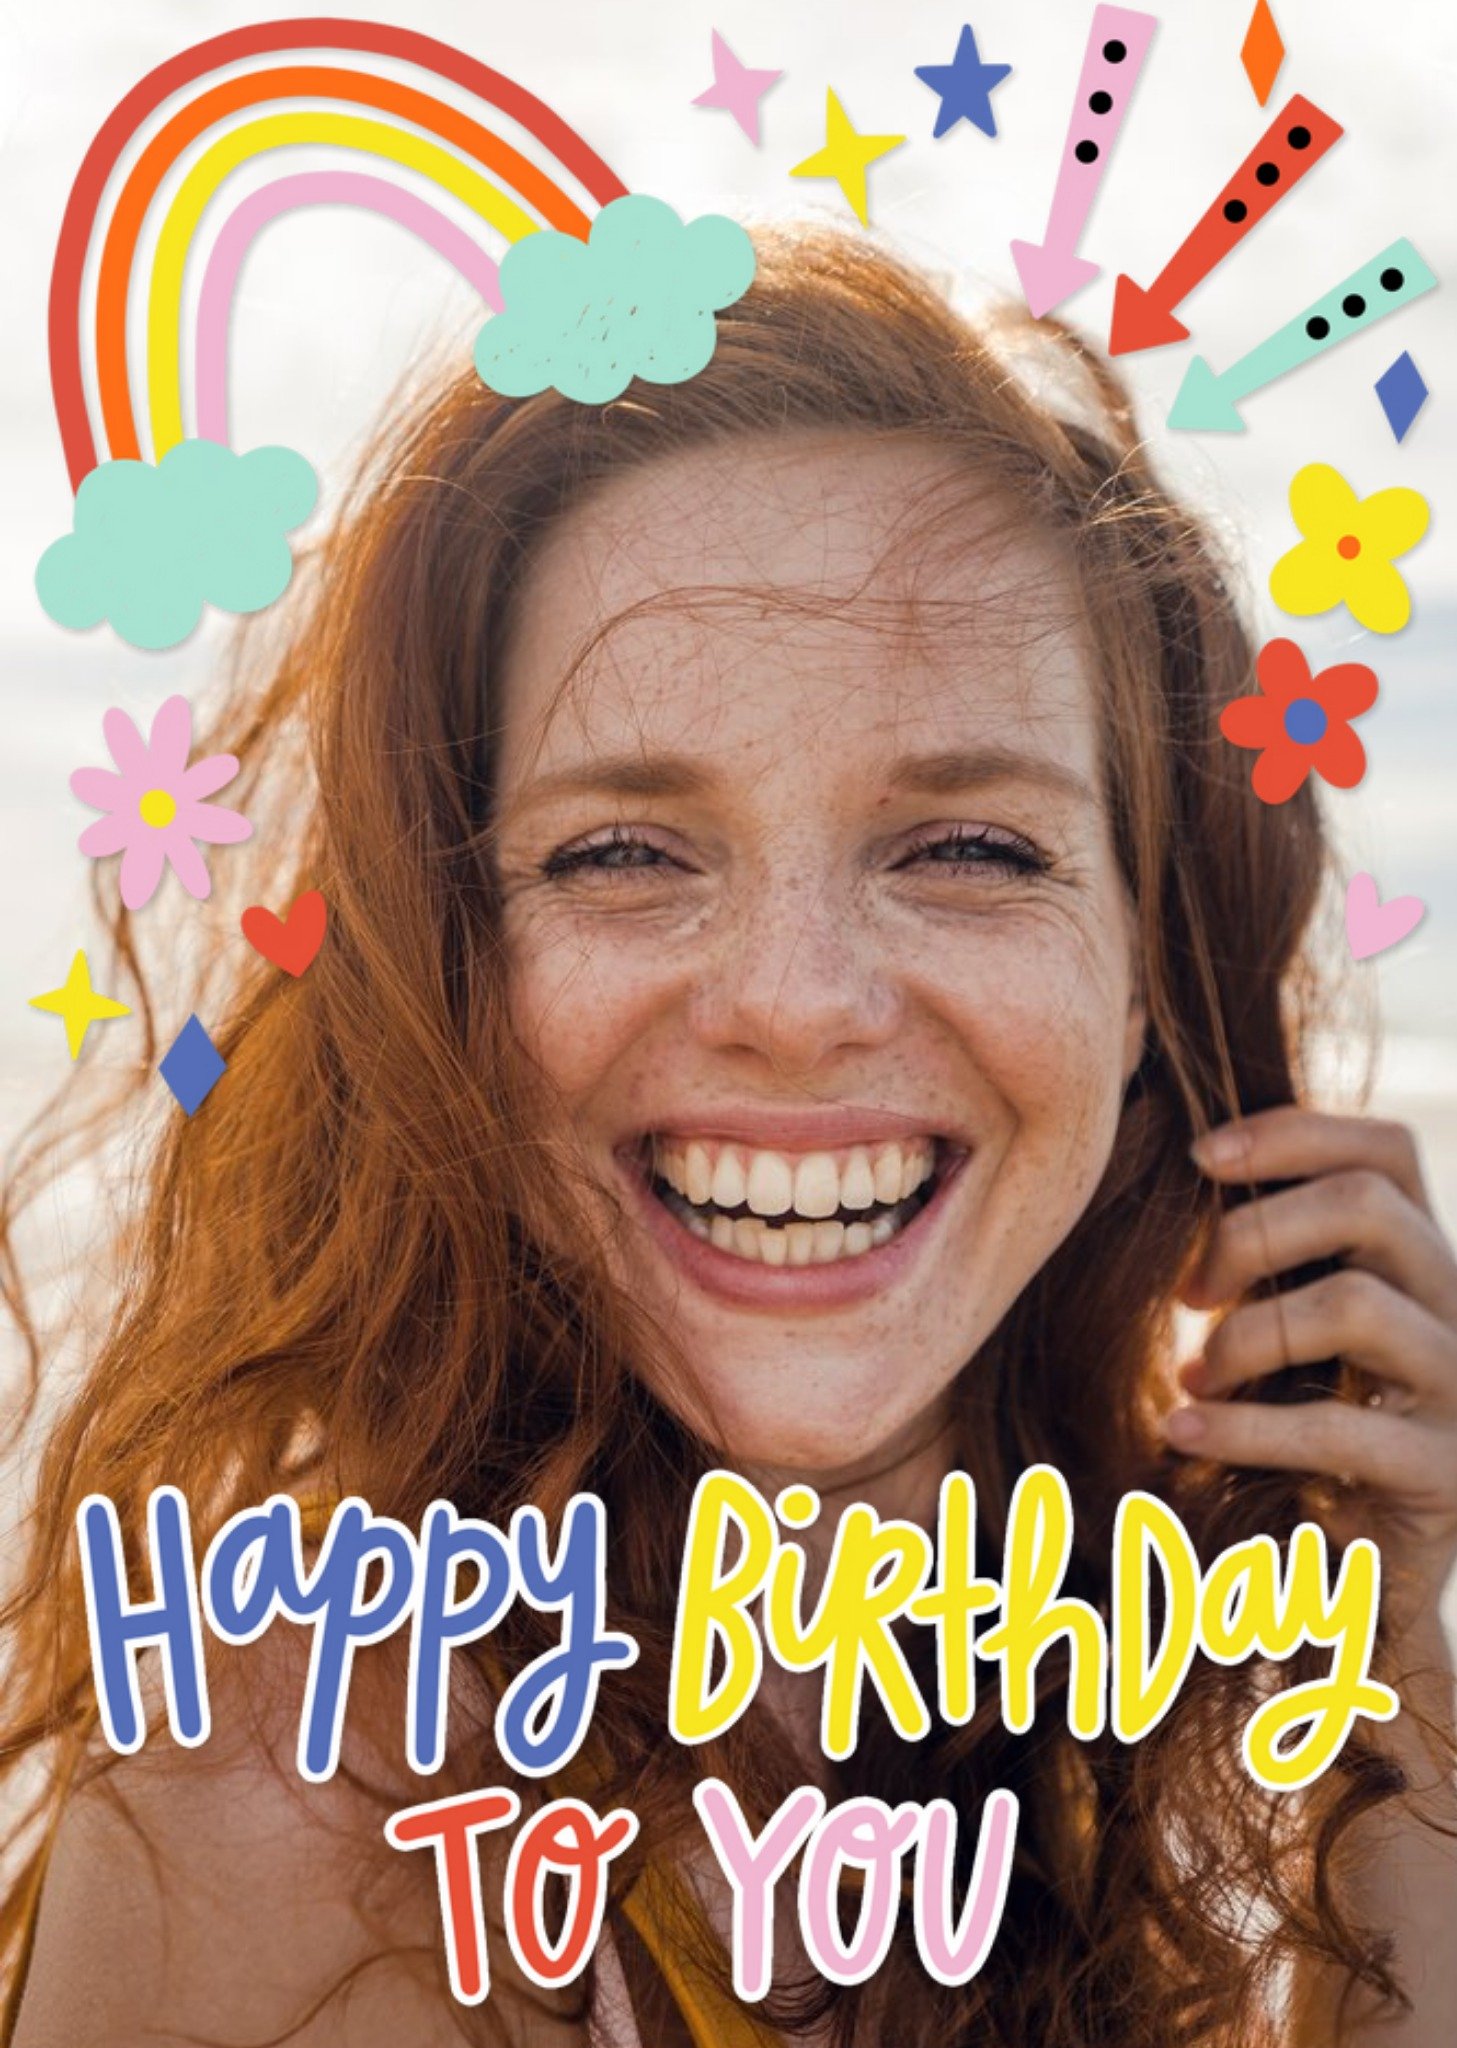 Moonpig Happy Birthday To You Bright Graphic Photo Upload Birthday Card, Large